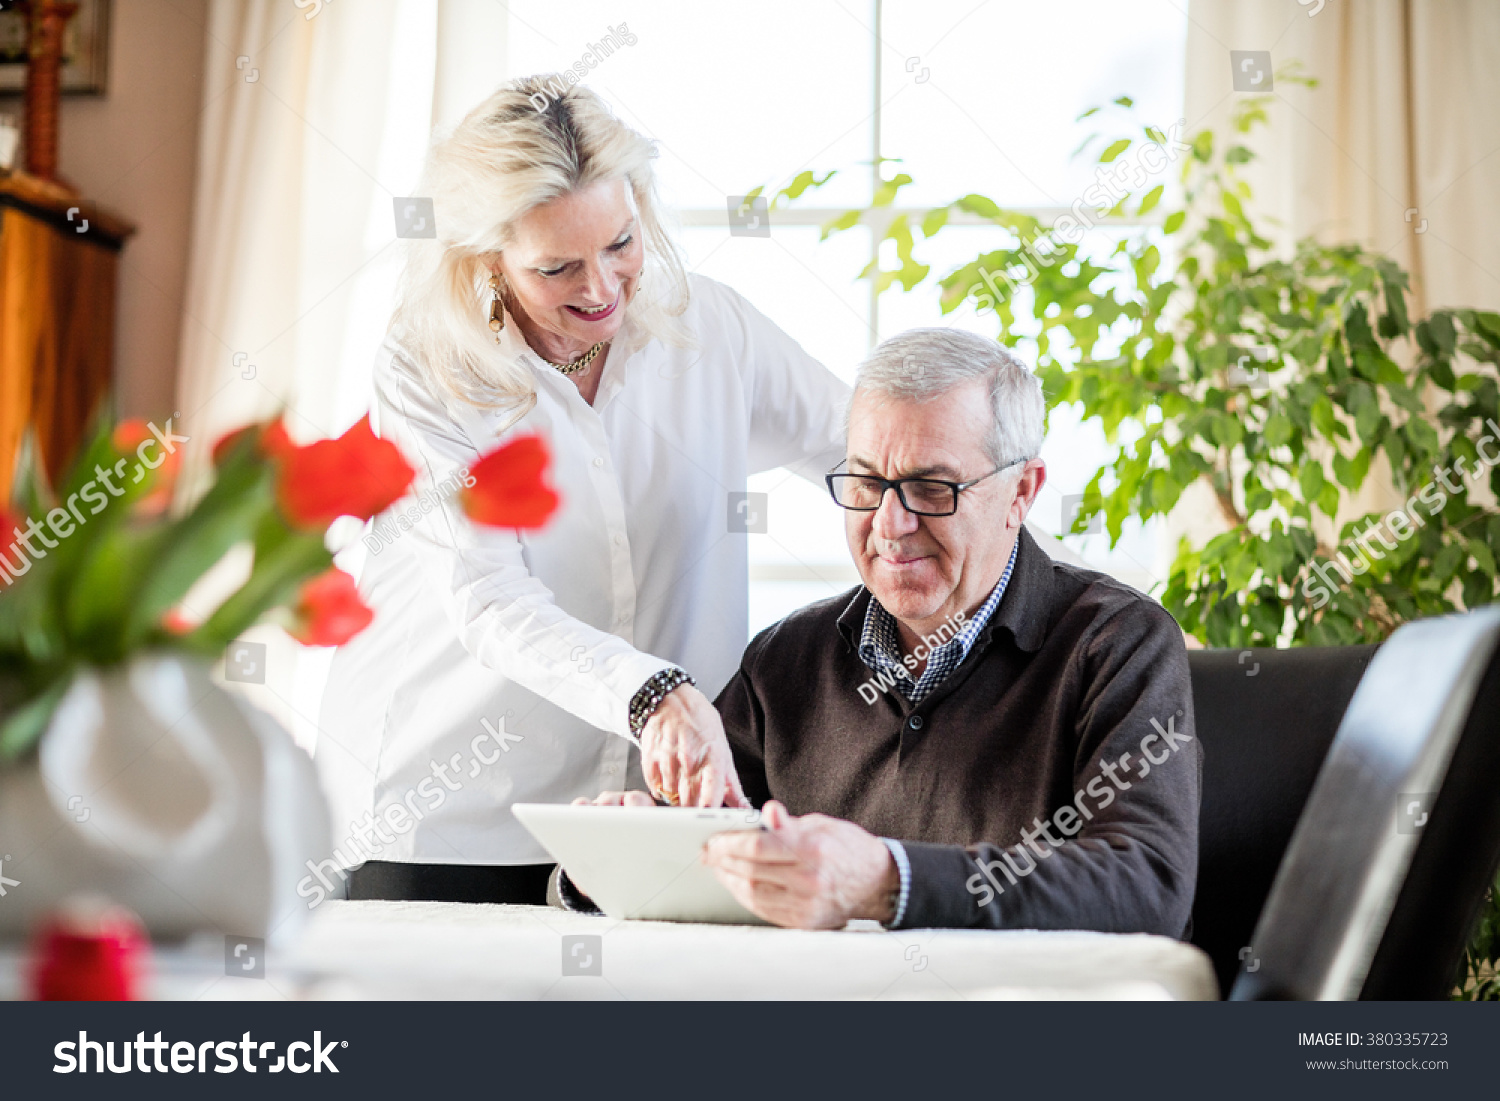 Older Couple Having Fun Smiling While Stock Photo Edit Now 380335723